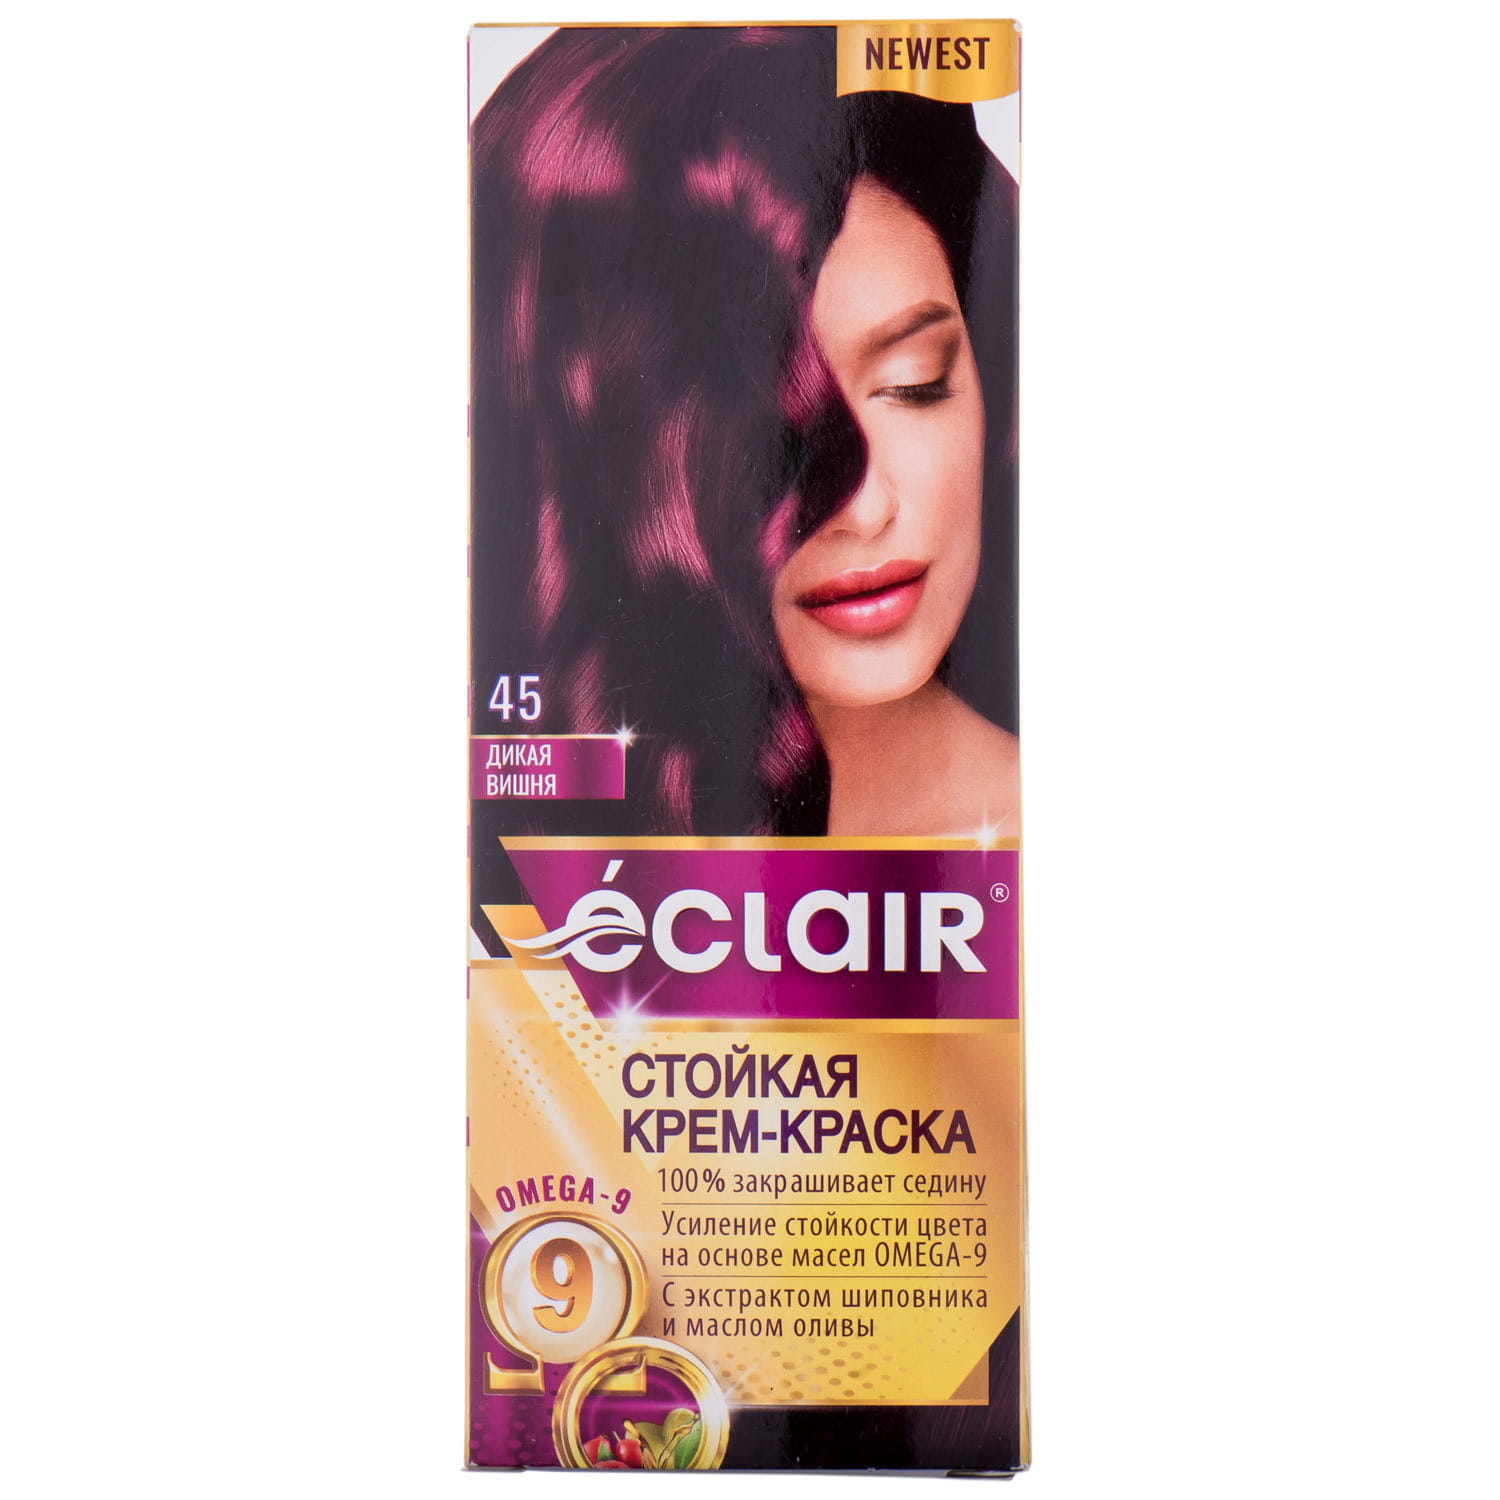 Дикая вишня краска. Краска Eclair Дикая вишня. Краска для волос Eclair Omega. Краска для волос "Eclair" omega9 73.. Eclair omega9 краска для волос 4.3.